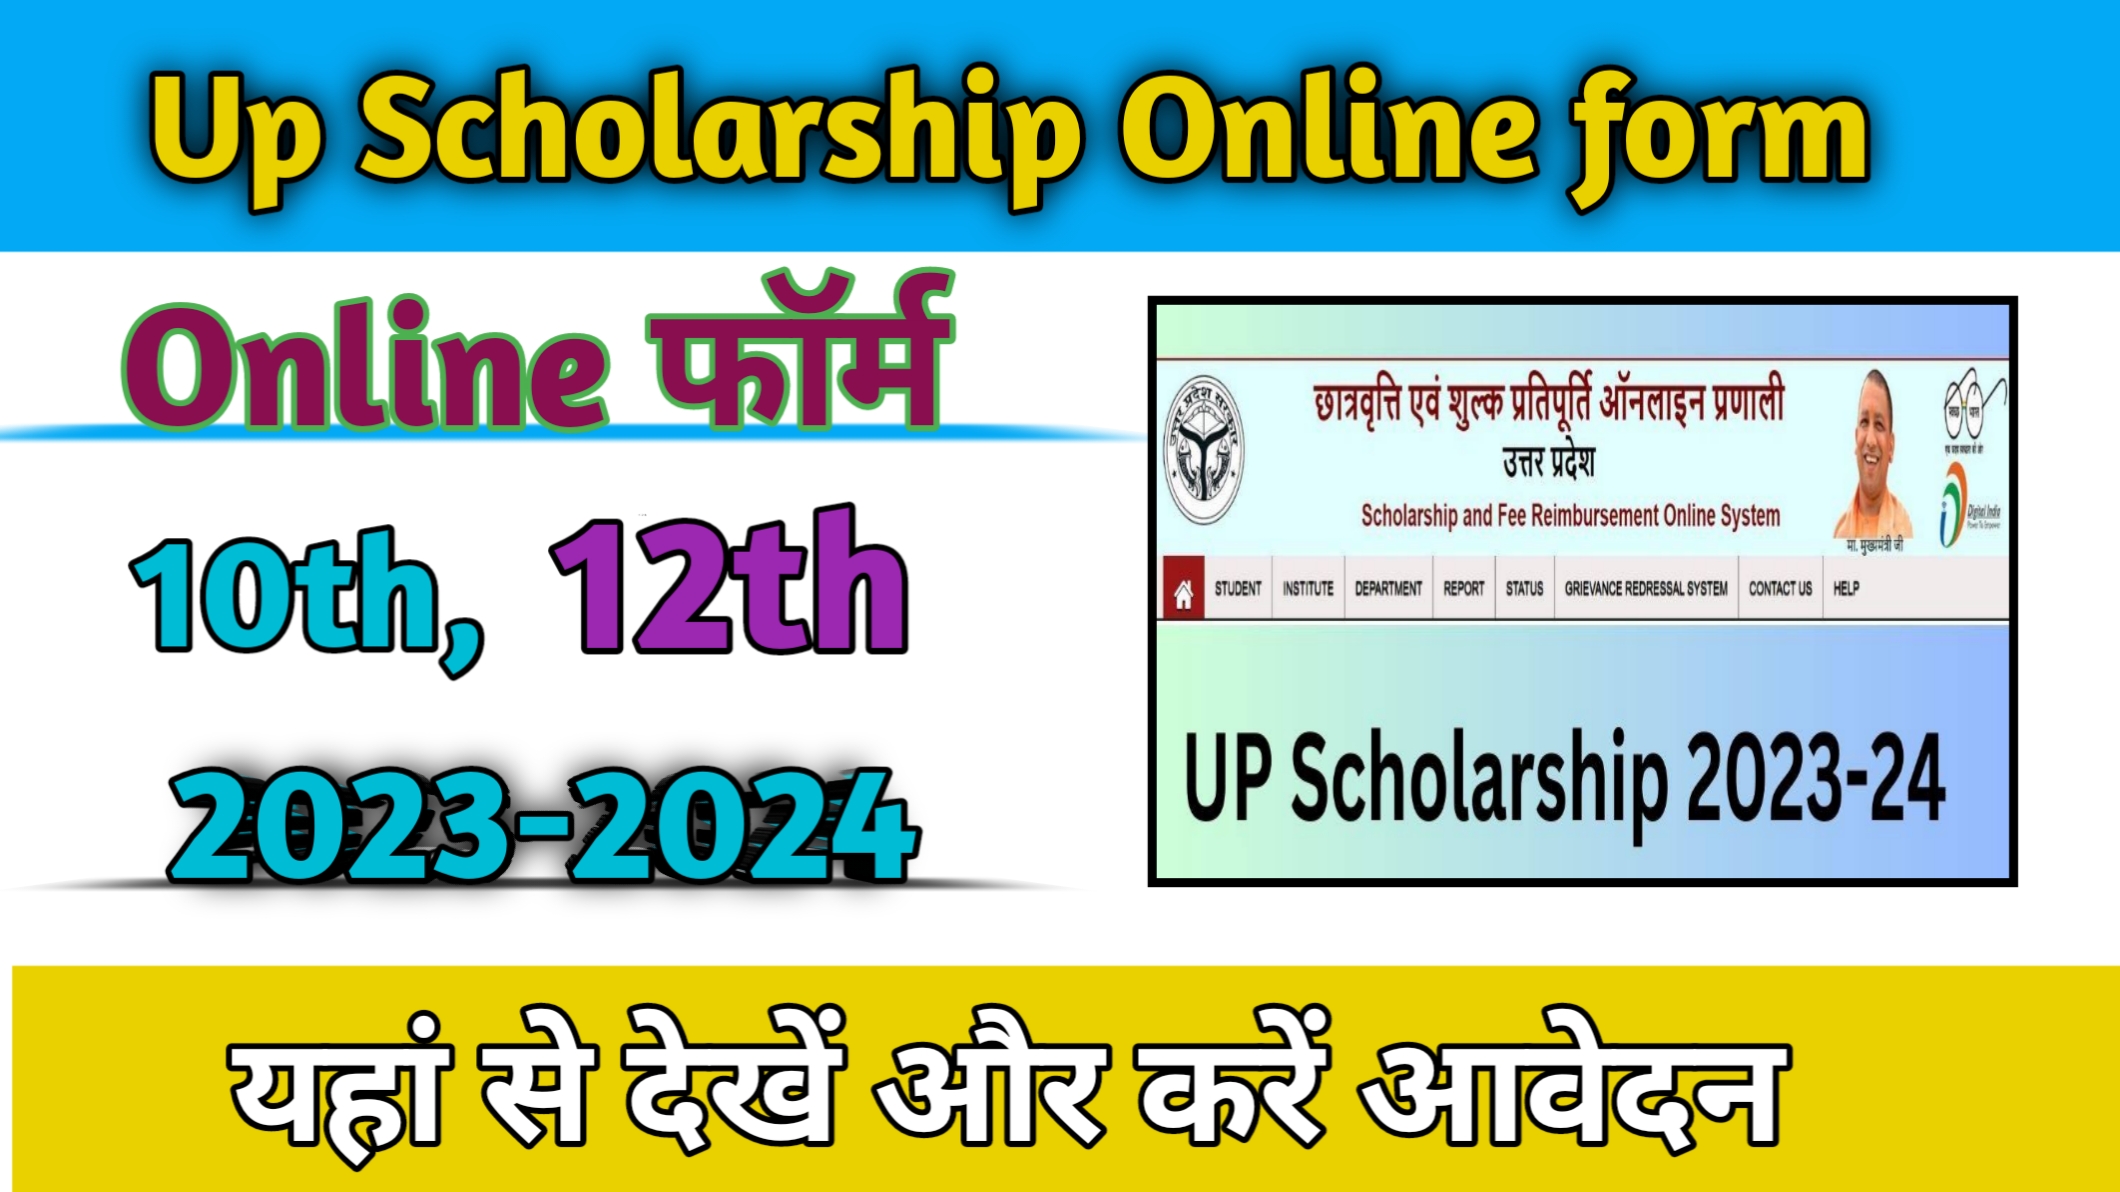 UP Scholarship Online Form 2023-2024